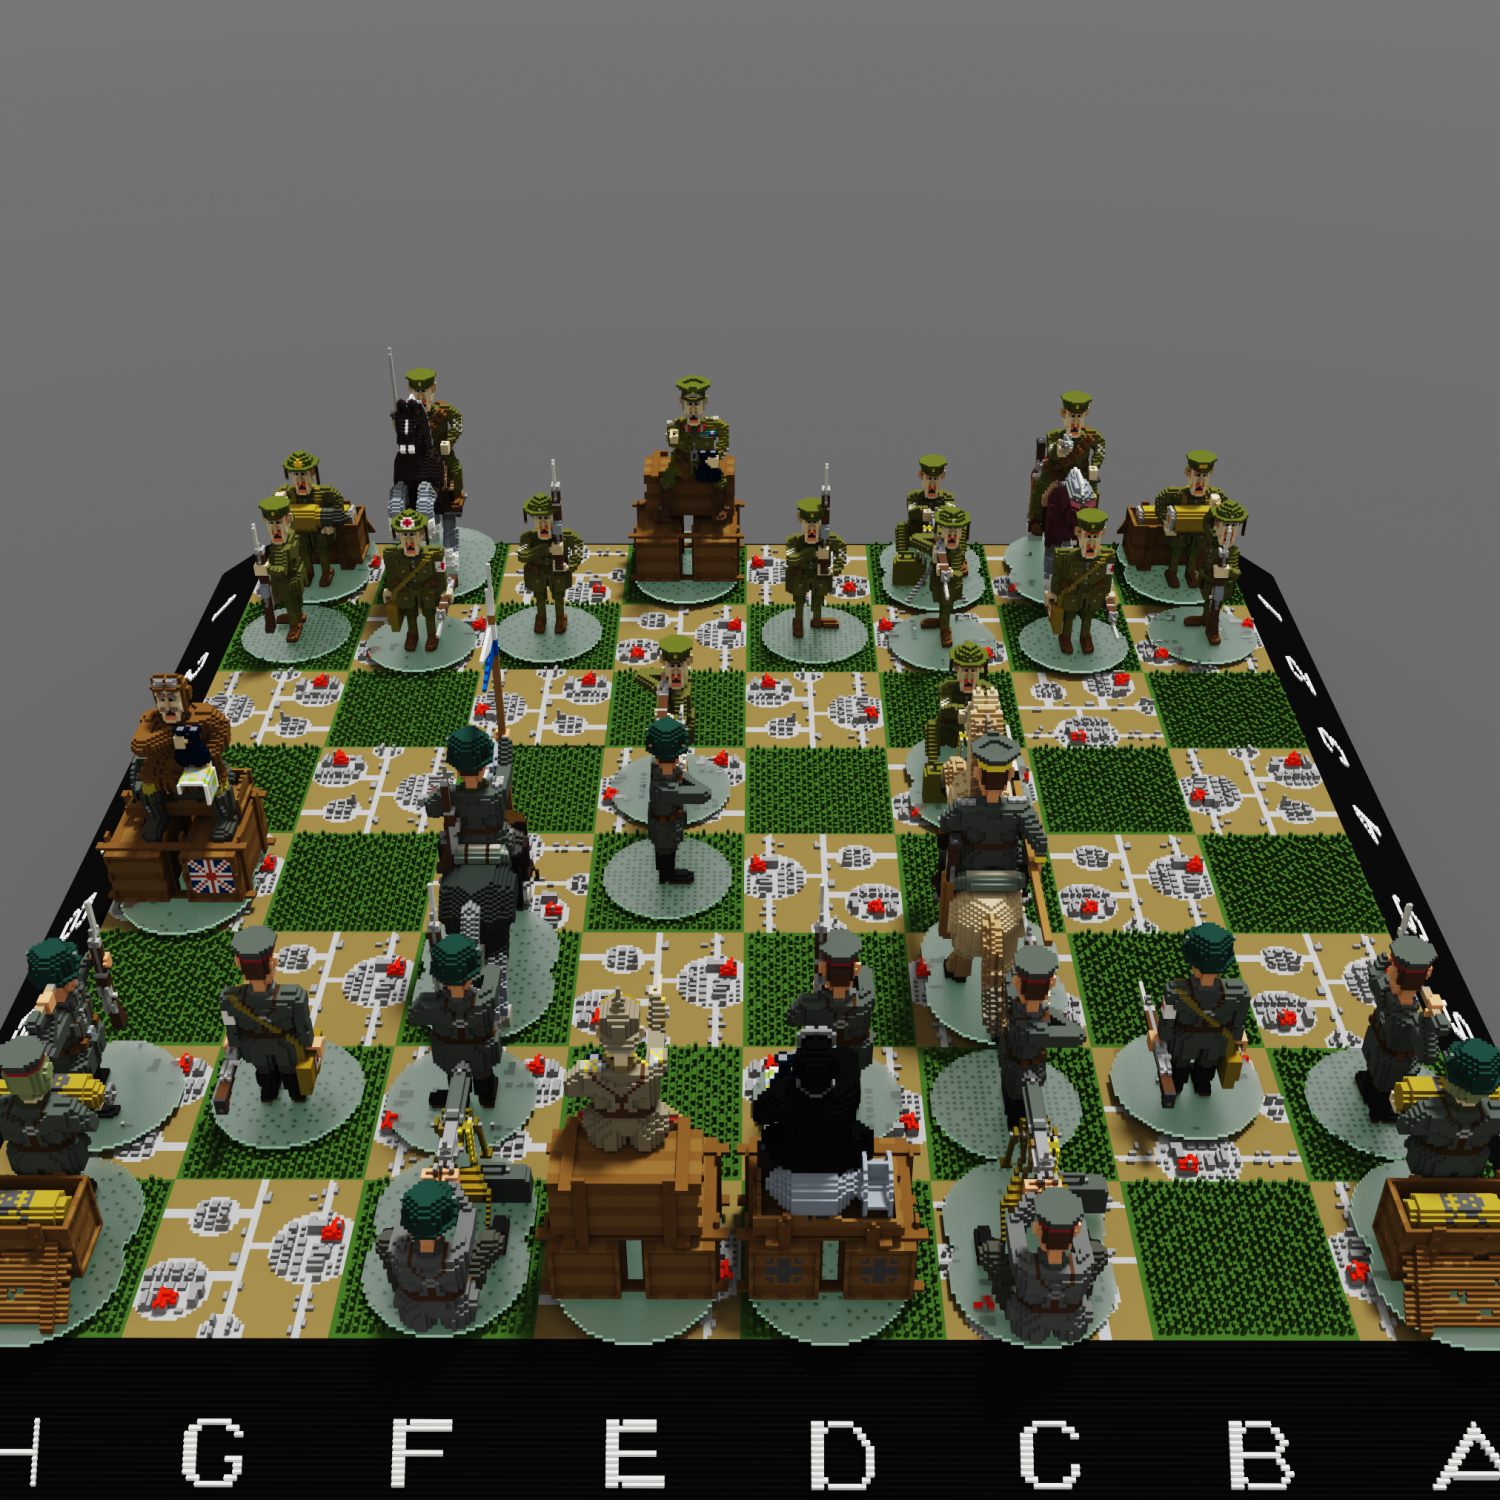 Chess World AR